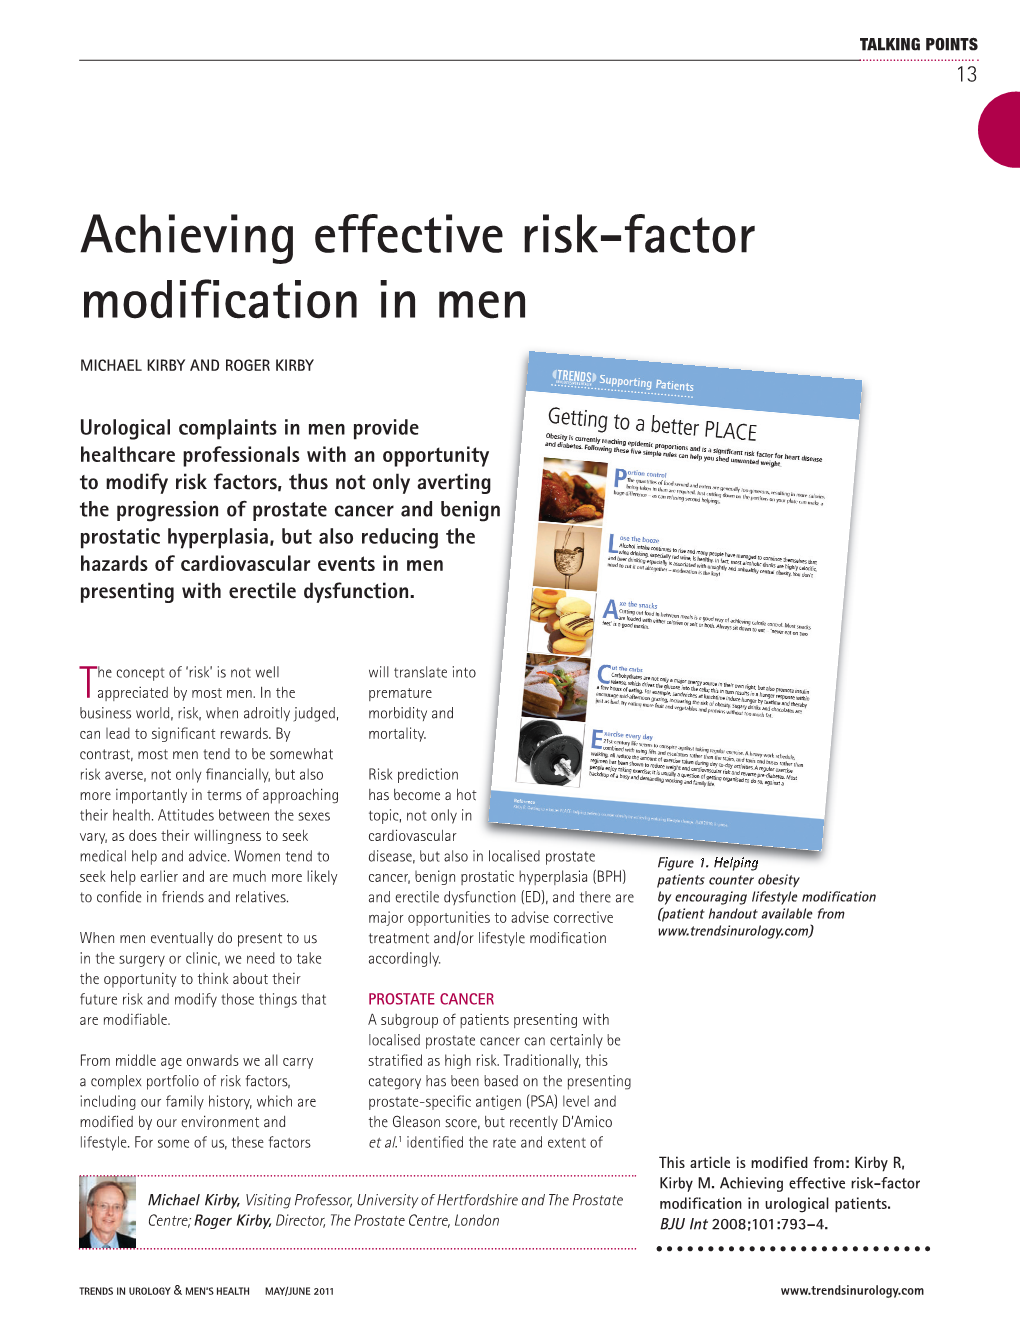 Achieving Effective Risk-Factor Modification in Men